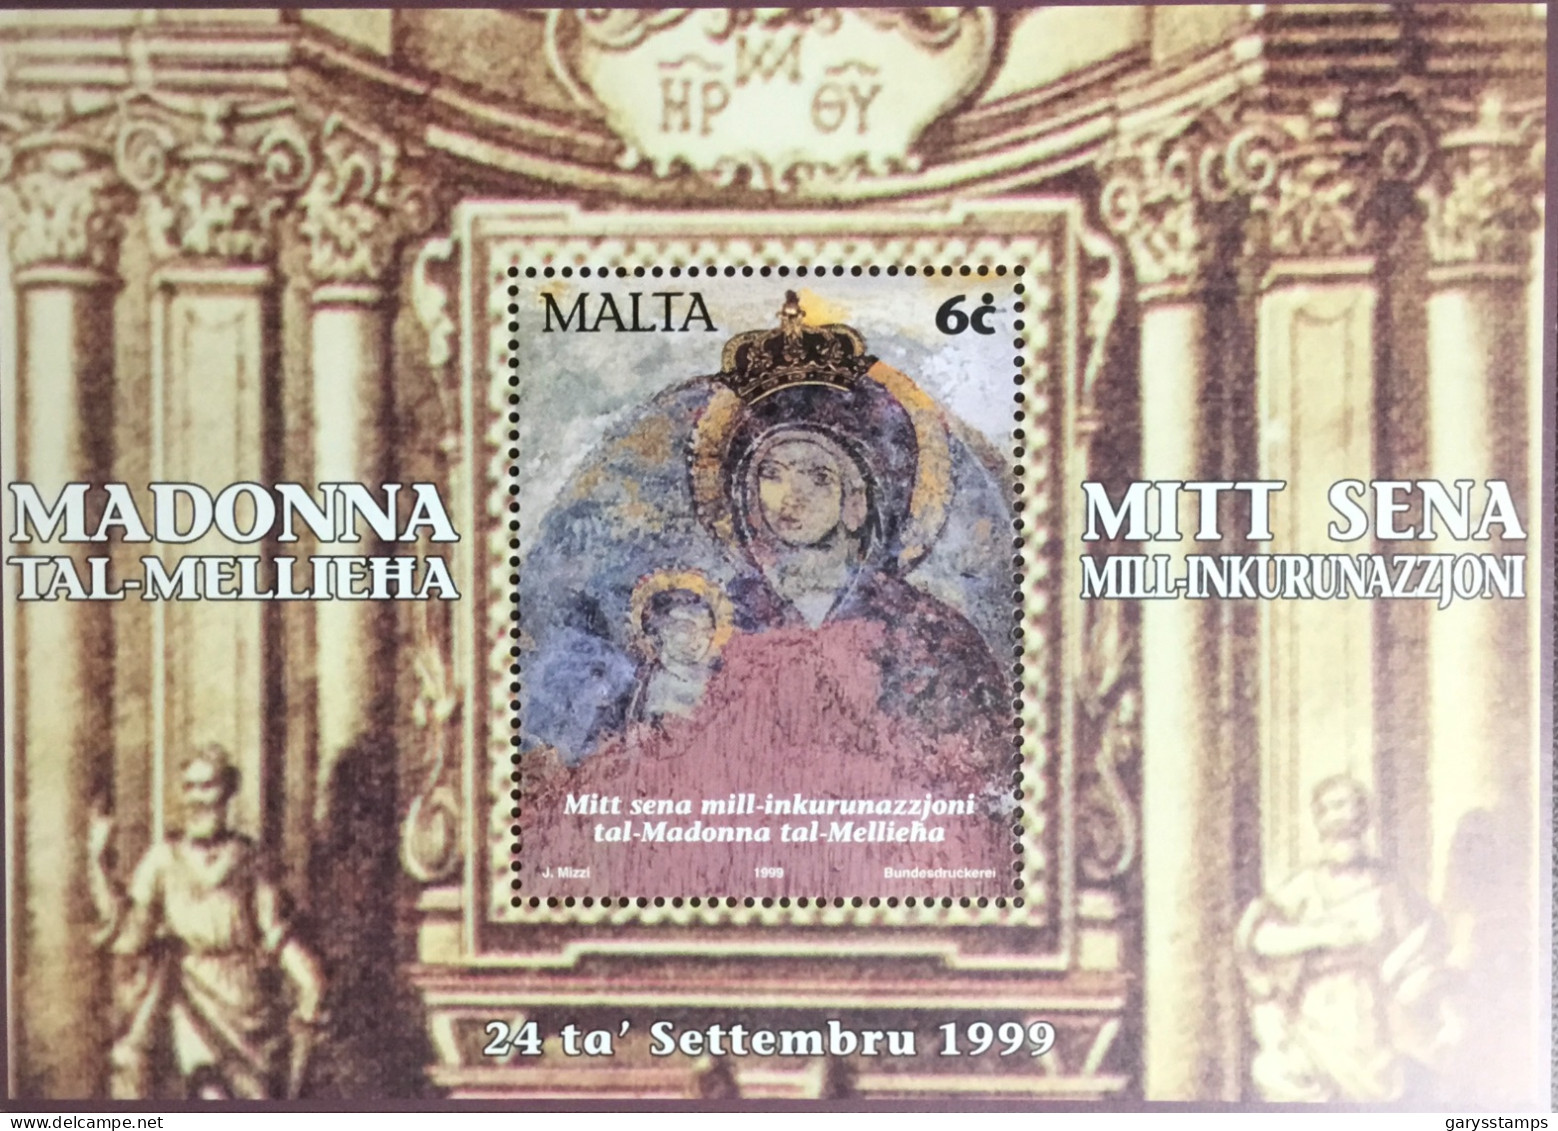 Malta 1999 Madonna & Child Minisheet MNH - Malte